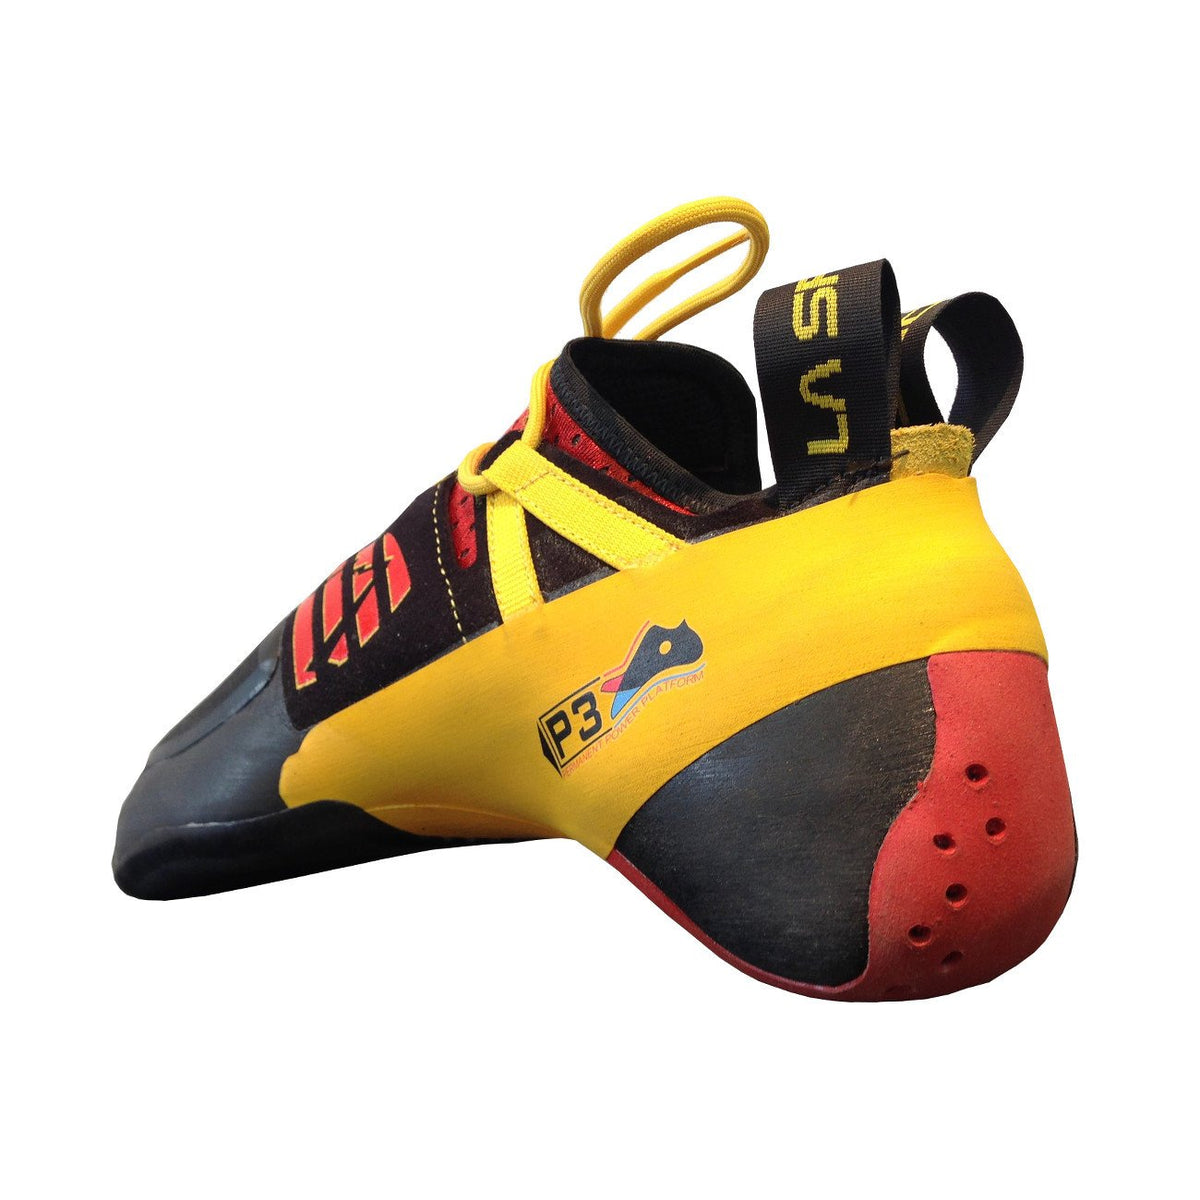 La Sportiva Genius climbing shoe, rear view showing heel and inside of the shoe design detail